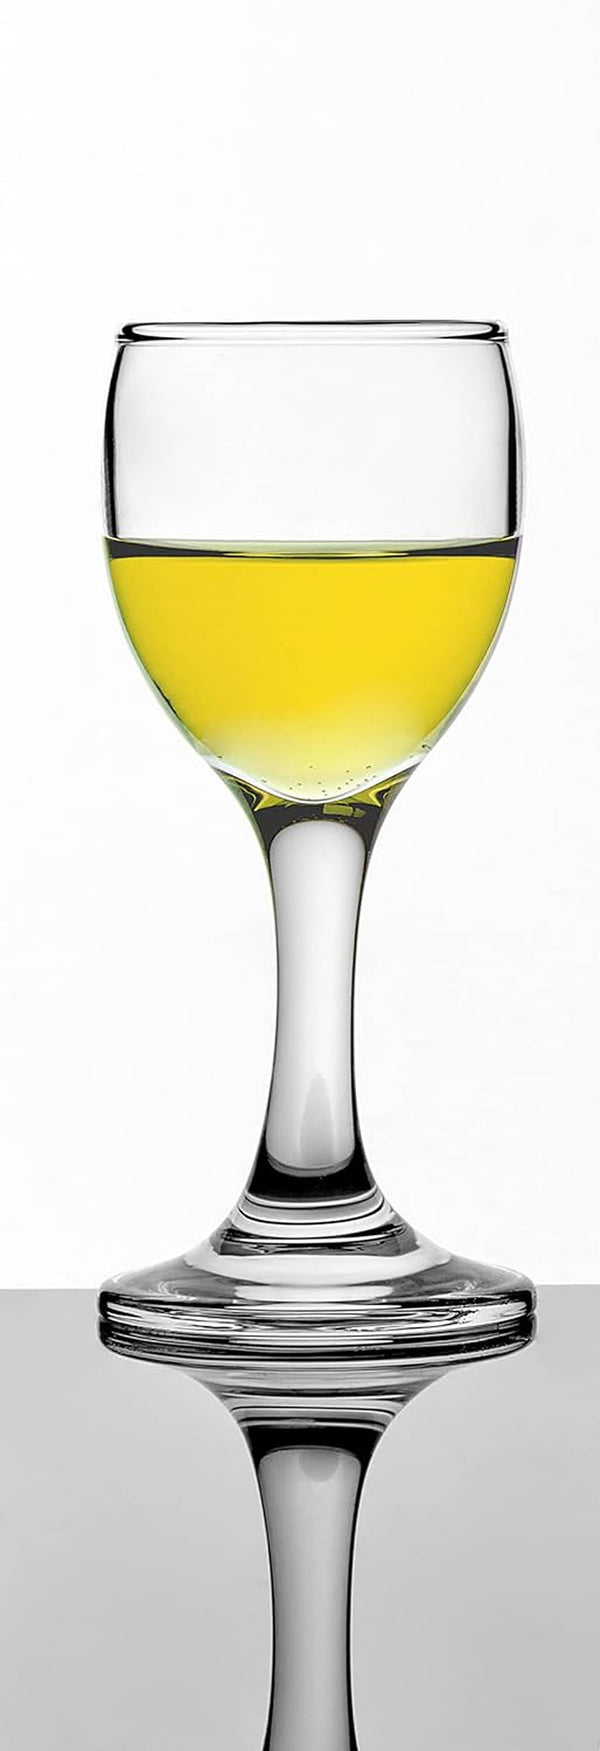 Pasabahce Premimum Shot Glasses Set of 6 - Bistro Cordial & Liqueur Extra Mini Glasses 2 oz (60 cc) - Mini Wine Glasses - Uniqe Desing Goblet - Crystal Tasting Glasses - Perfect for Parties, Gifts